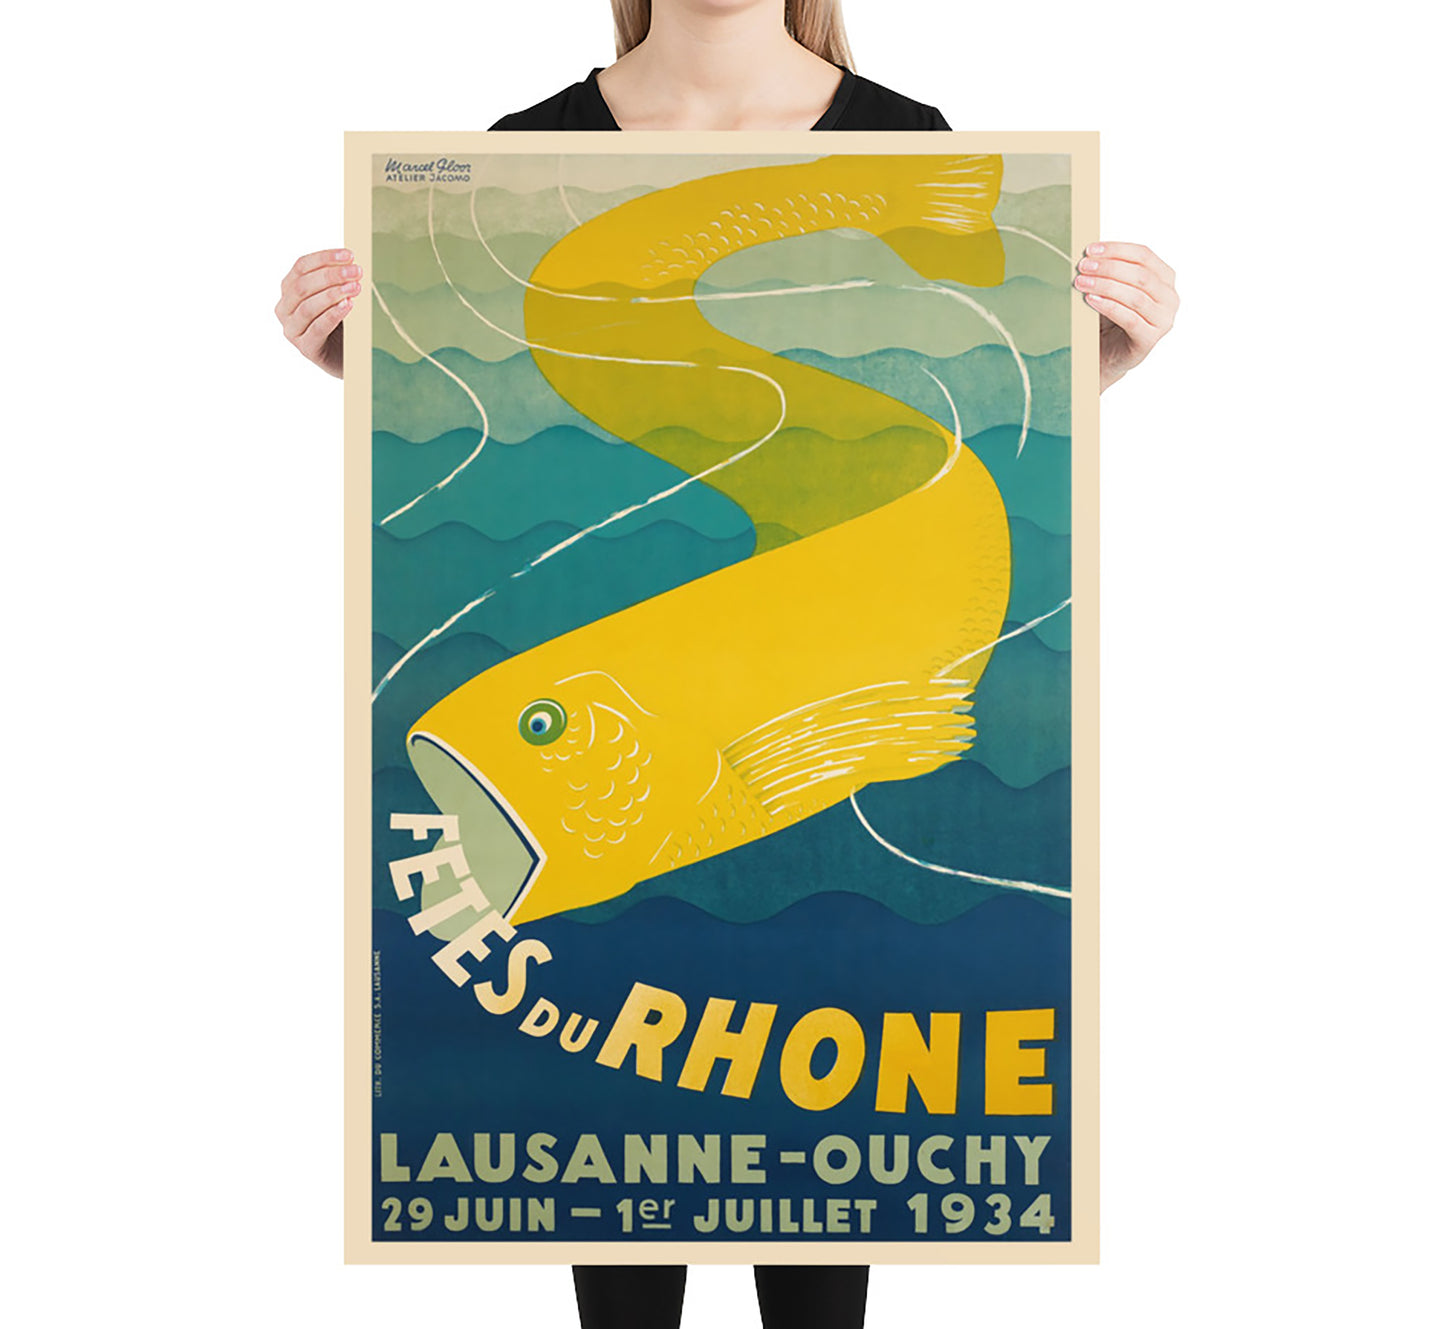 Rare Rhone Festival 1934 in Lausanne, Switzerland vintage travel poster by Marcel Gloor, 1934.